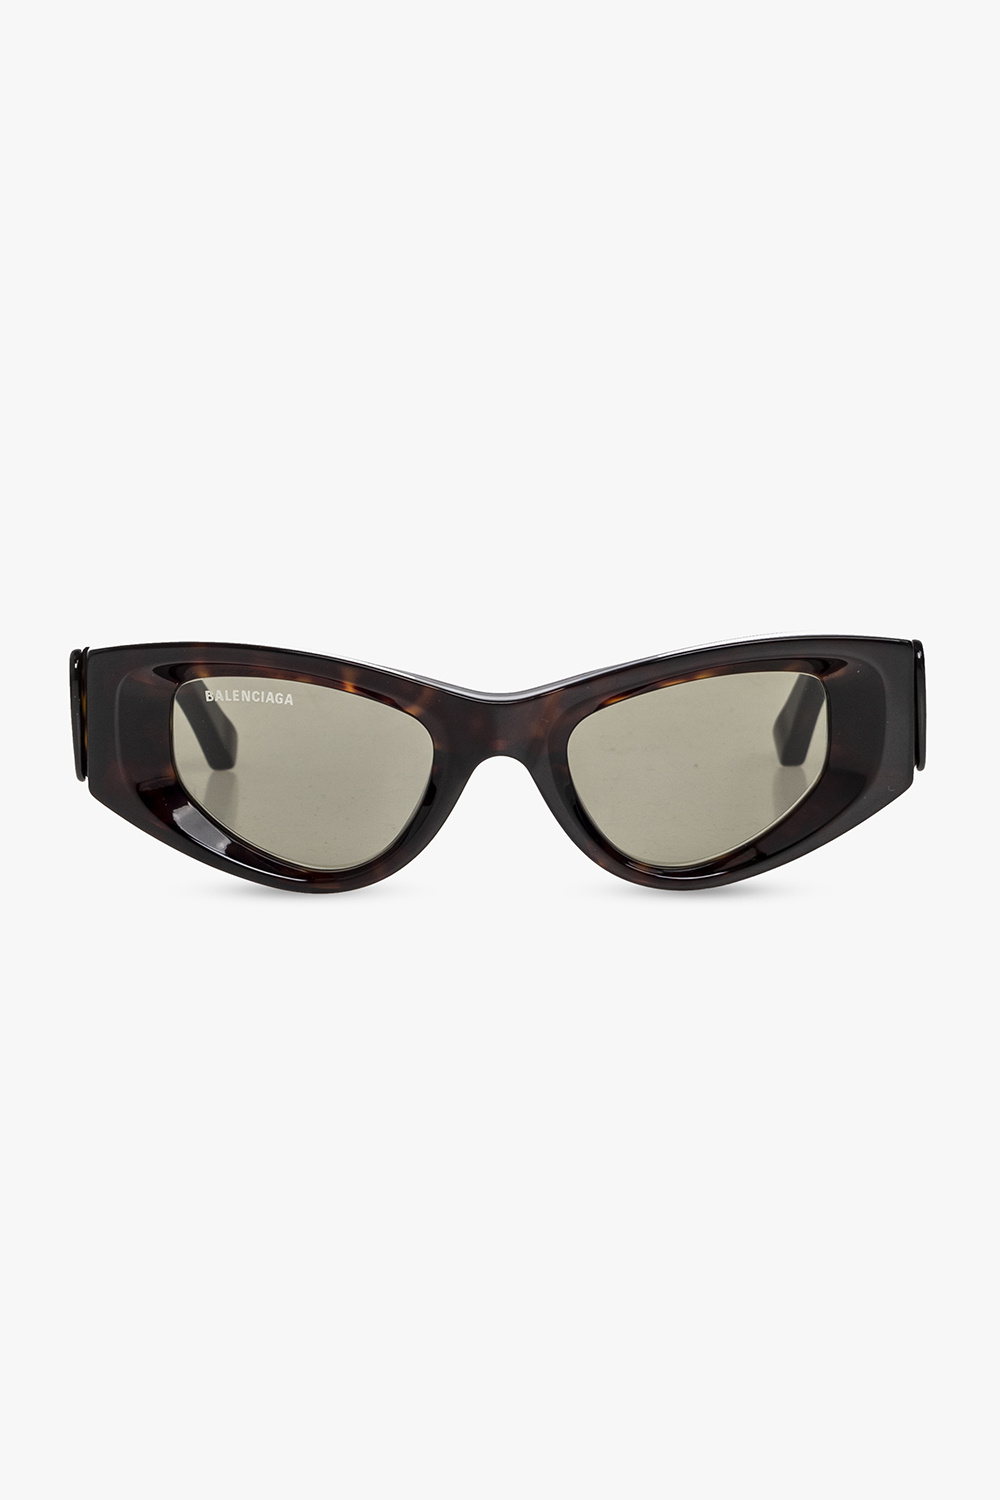 BALENCIAGA Odeon Cat Sunglasses  FASHION CLINIC – Fashion Clinic